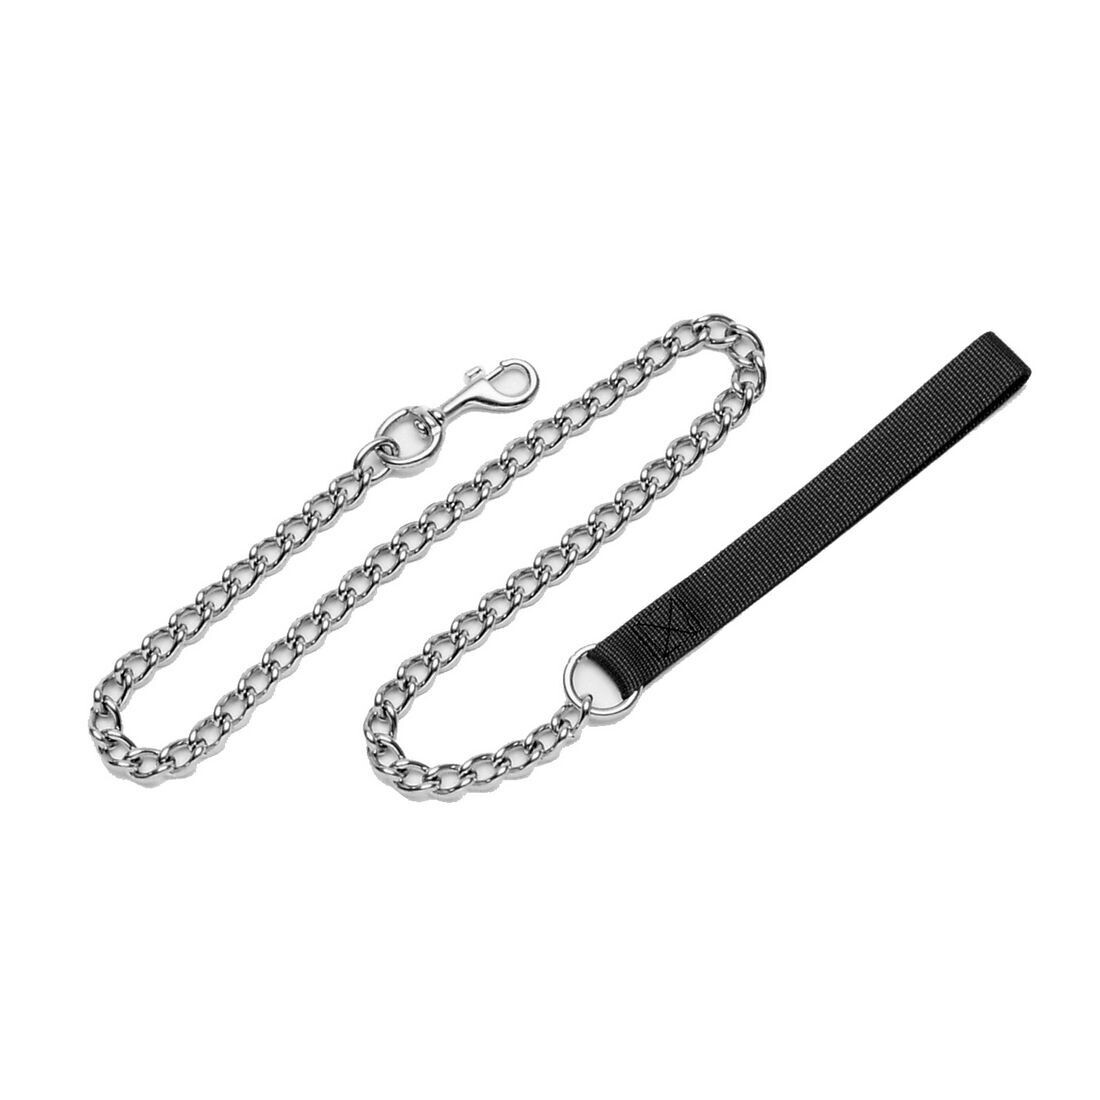 Titan Chain Leash with Nylon Handle - Black 2 mm - 4 foot